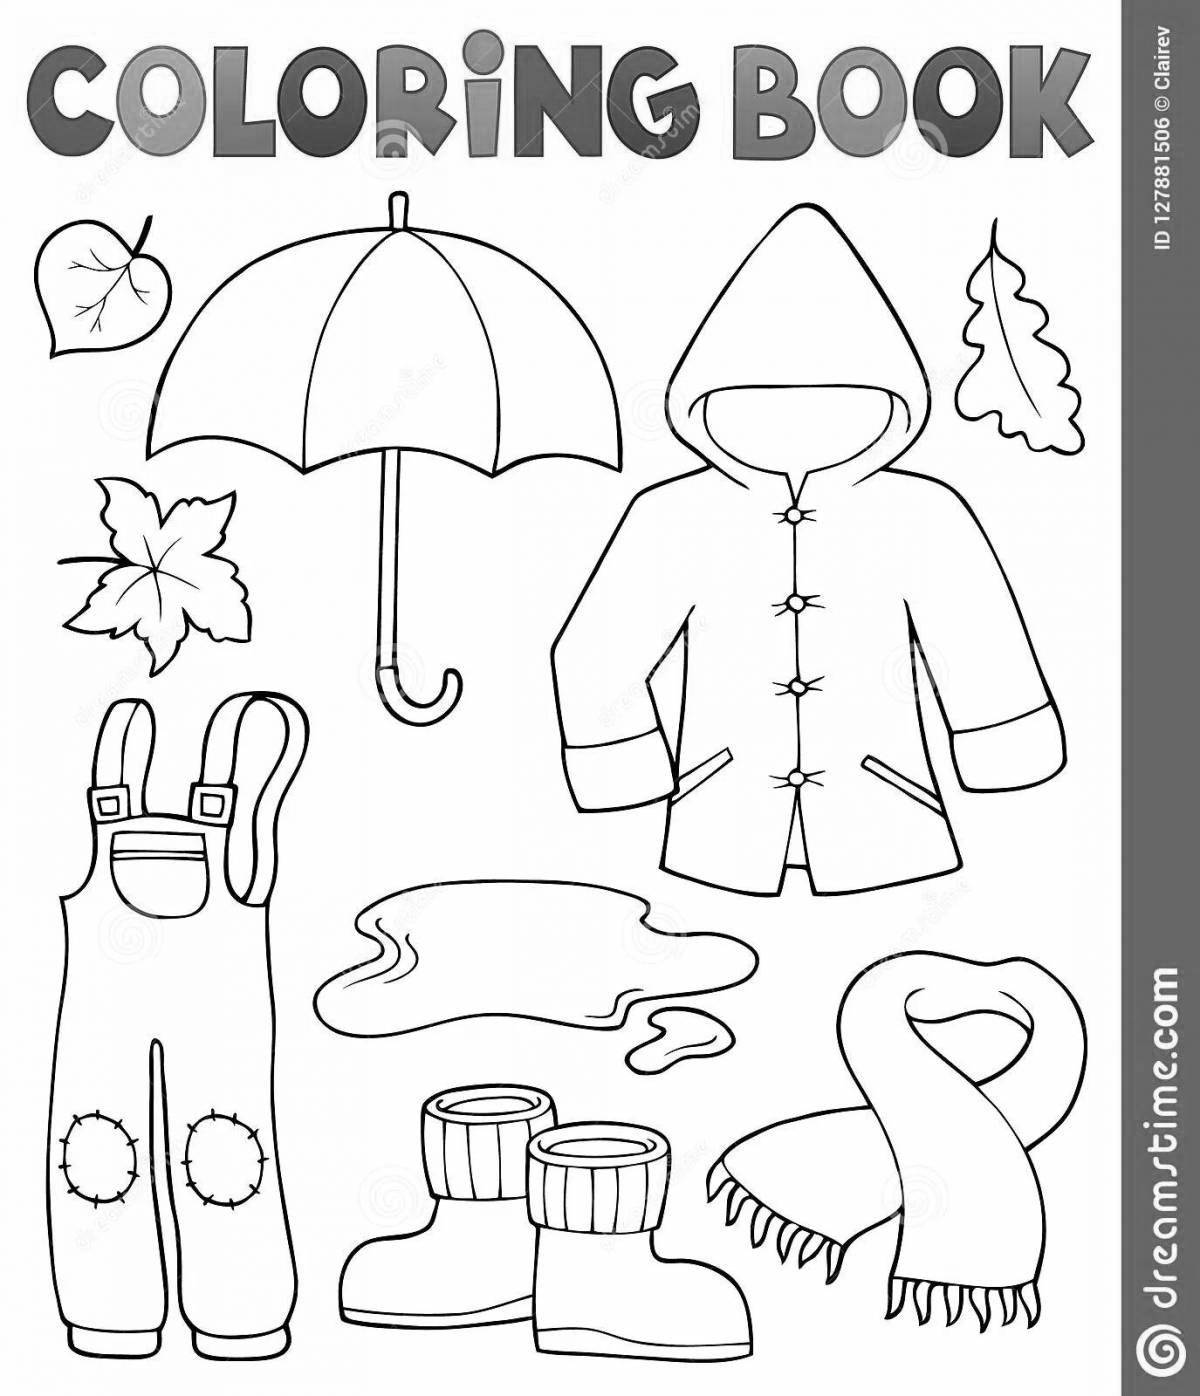 Coloring book adorable winter clothes for preschoolers